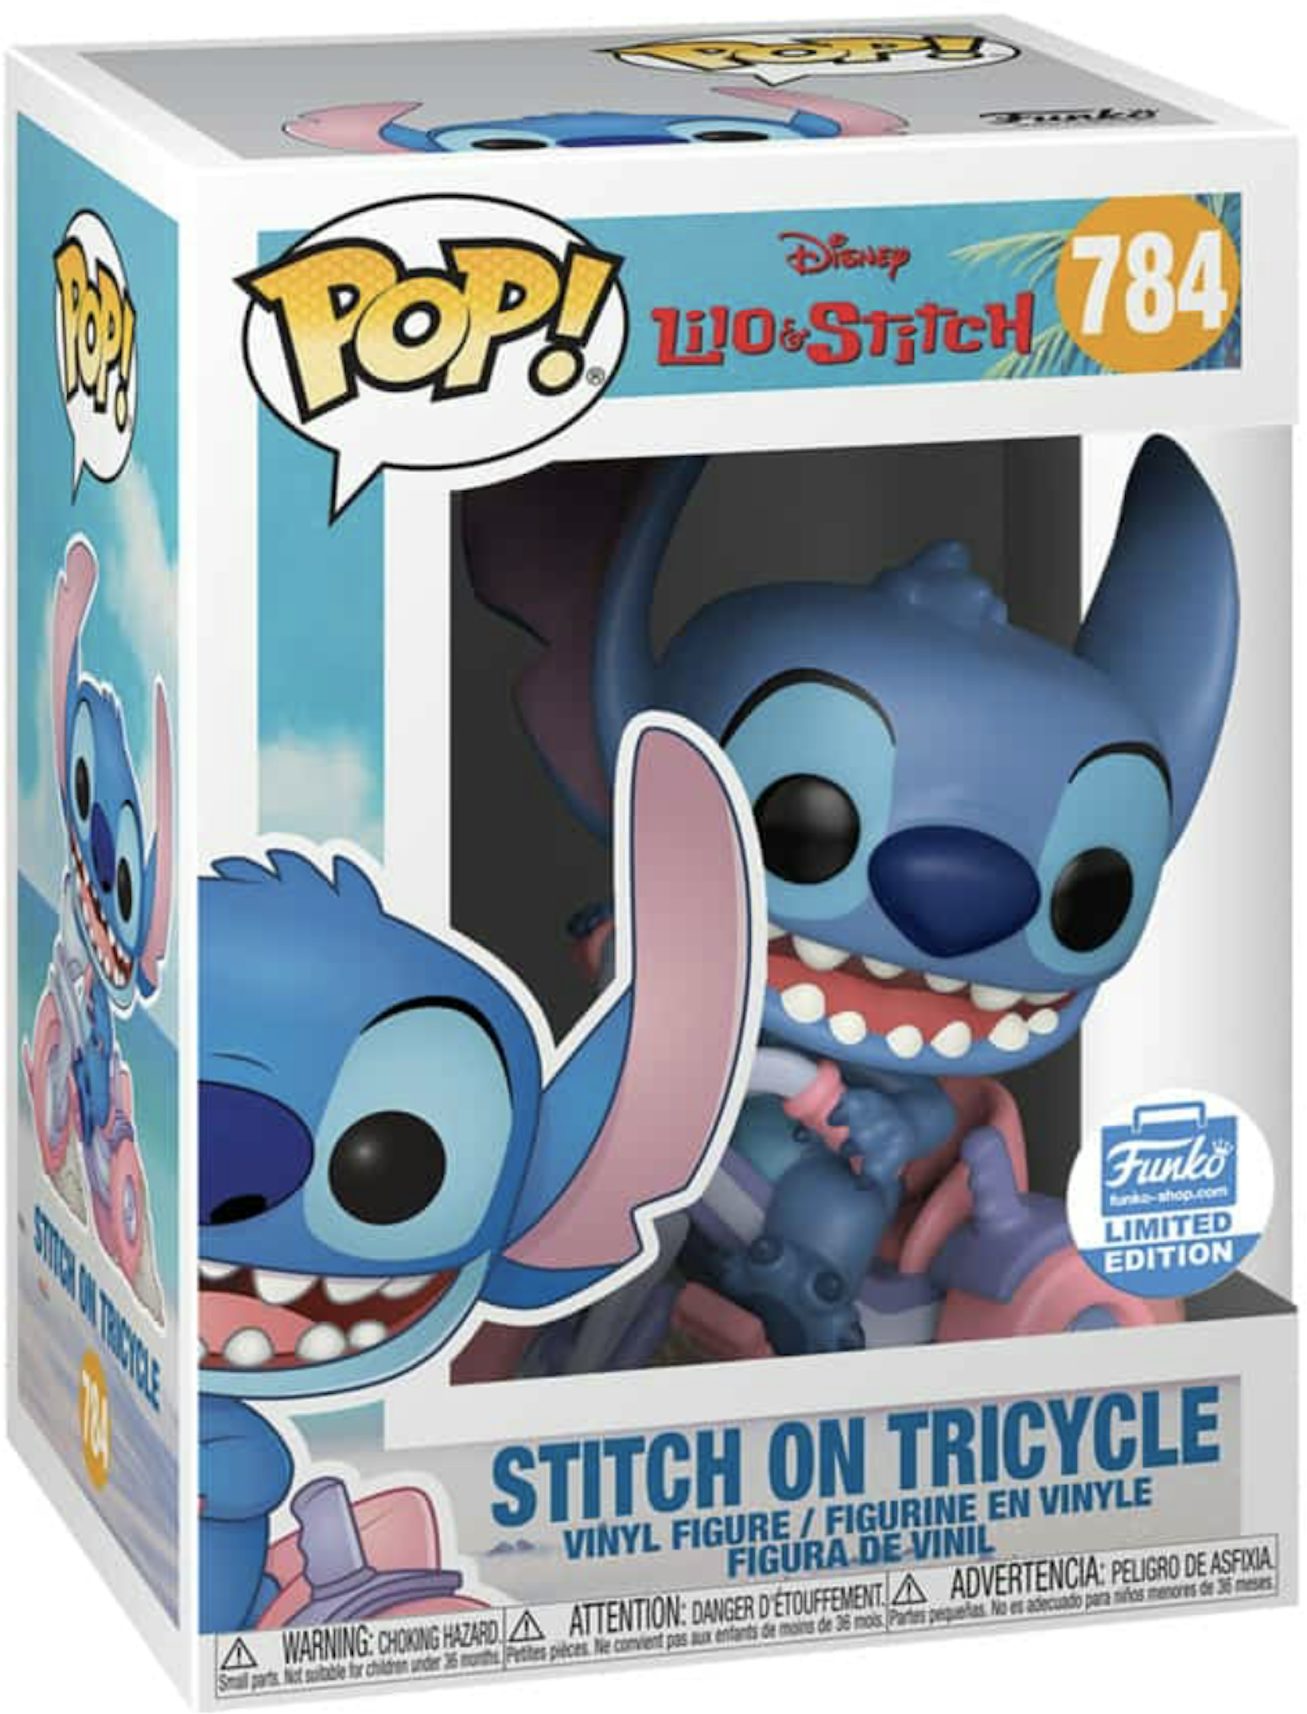 images./images/Funko-Pop-Disney-Stitch-o